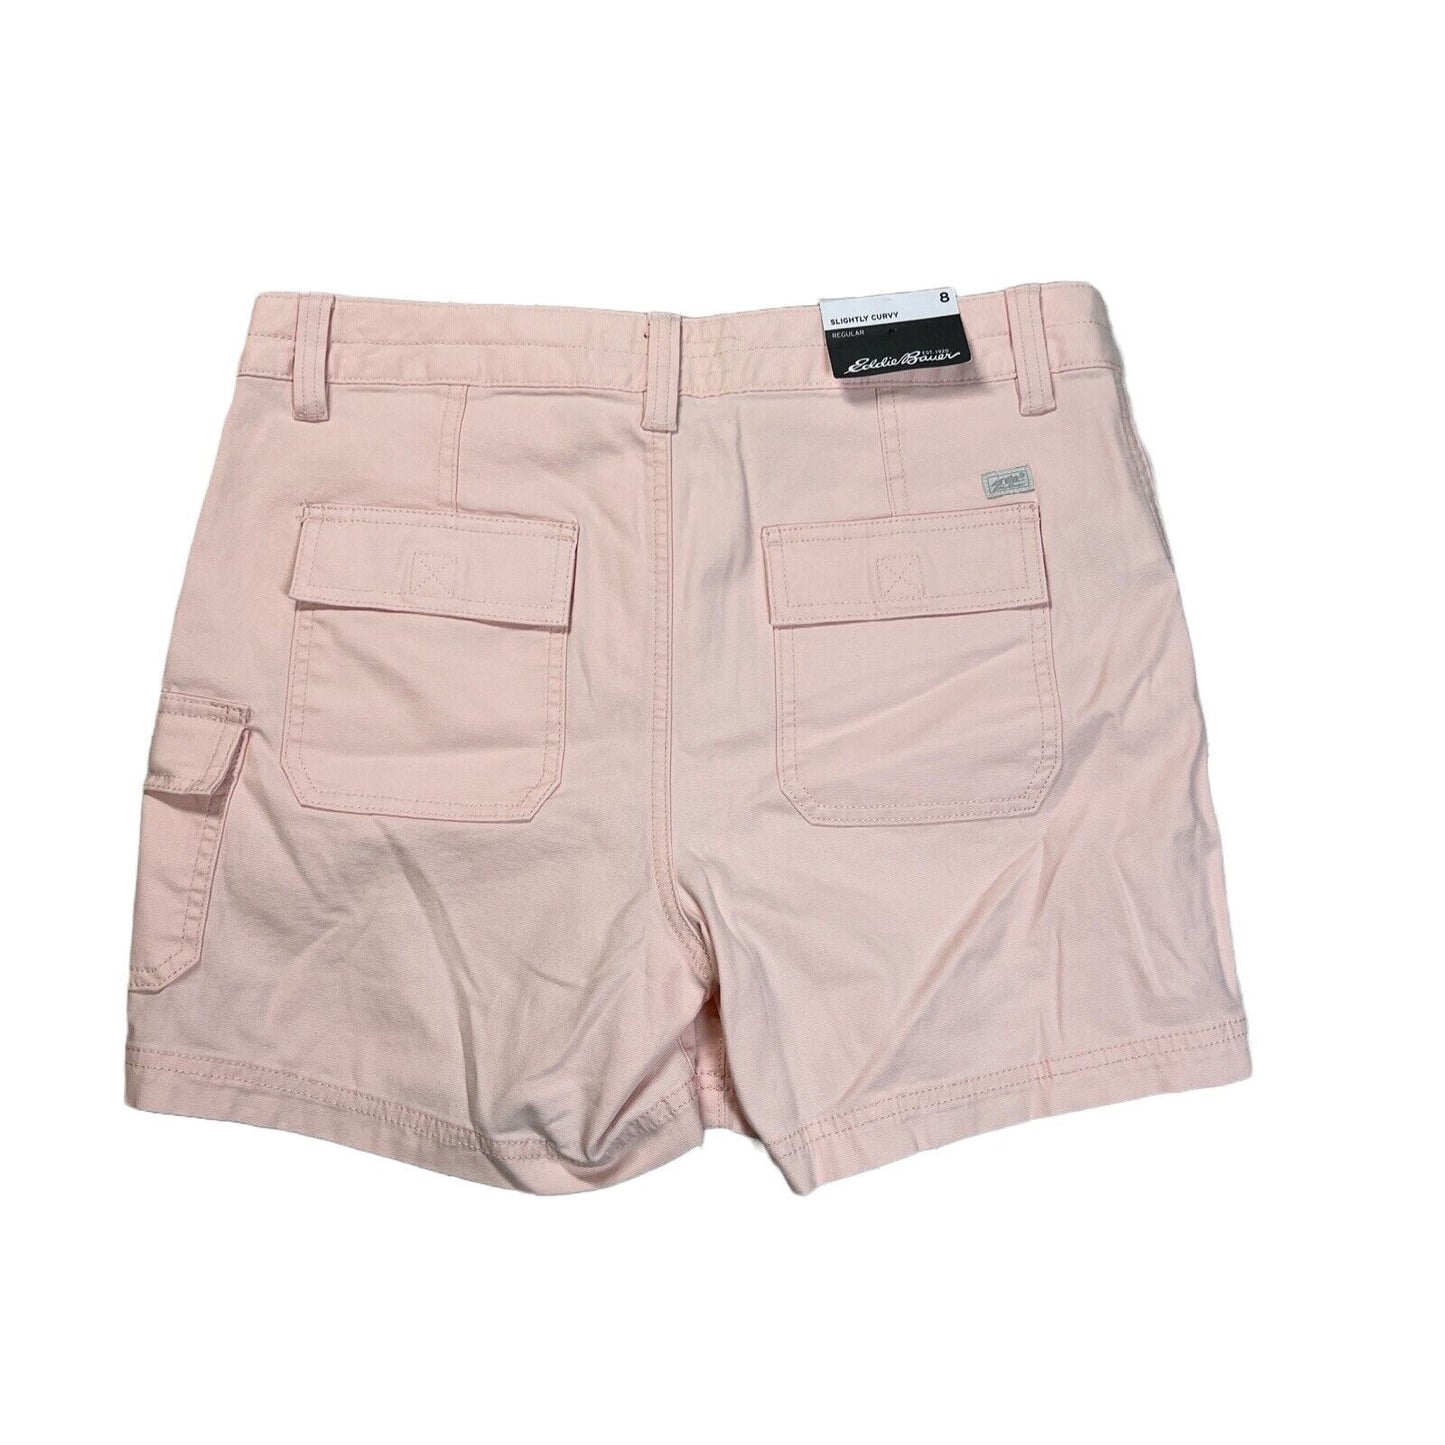 NEW Eddie Bauer Women's Pink Slightly Curvy Khaki Cargo Shorts - 8